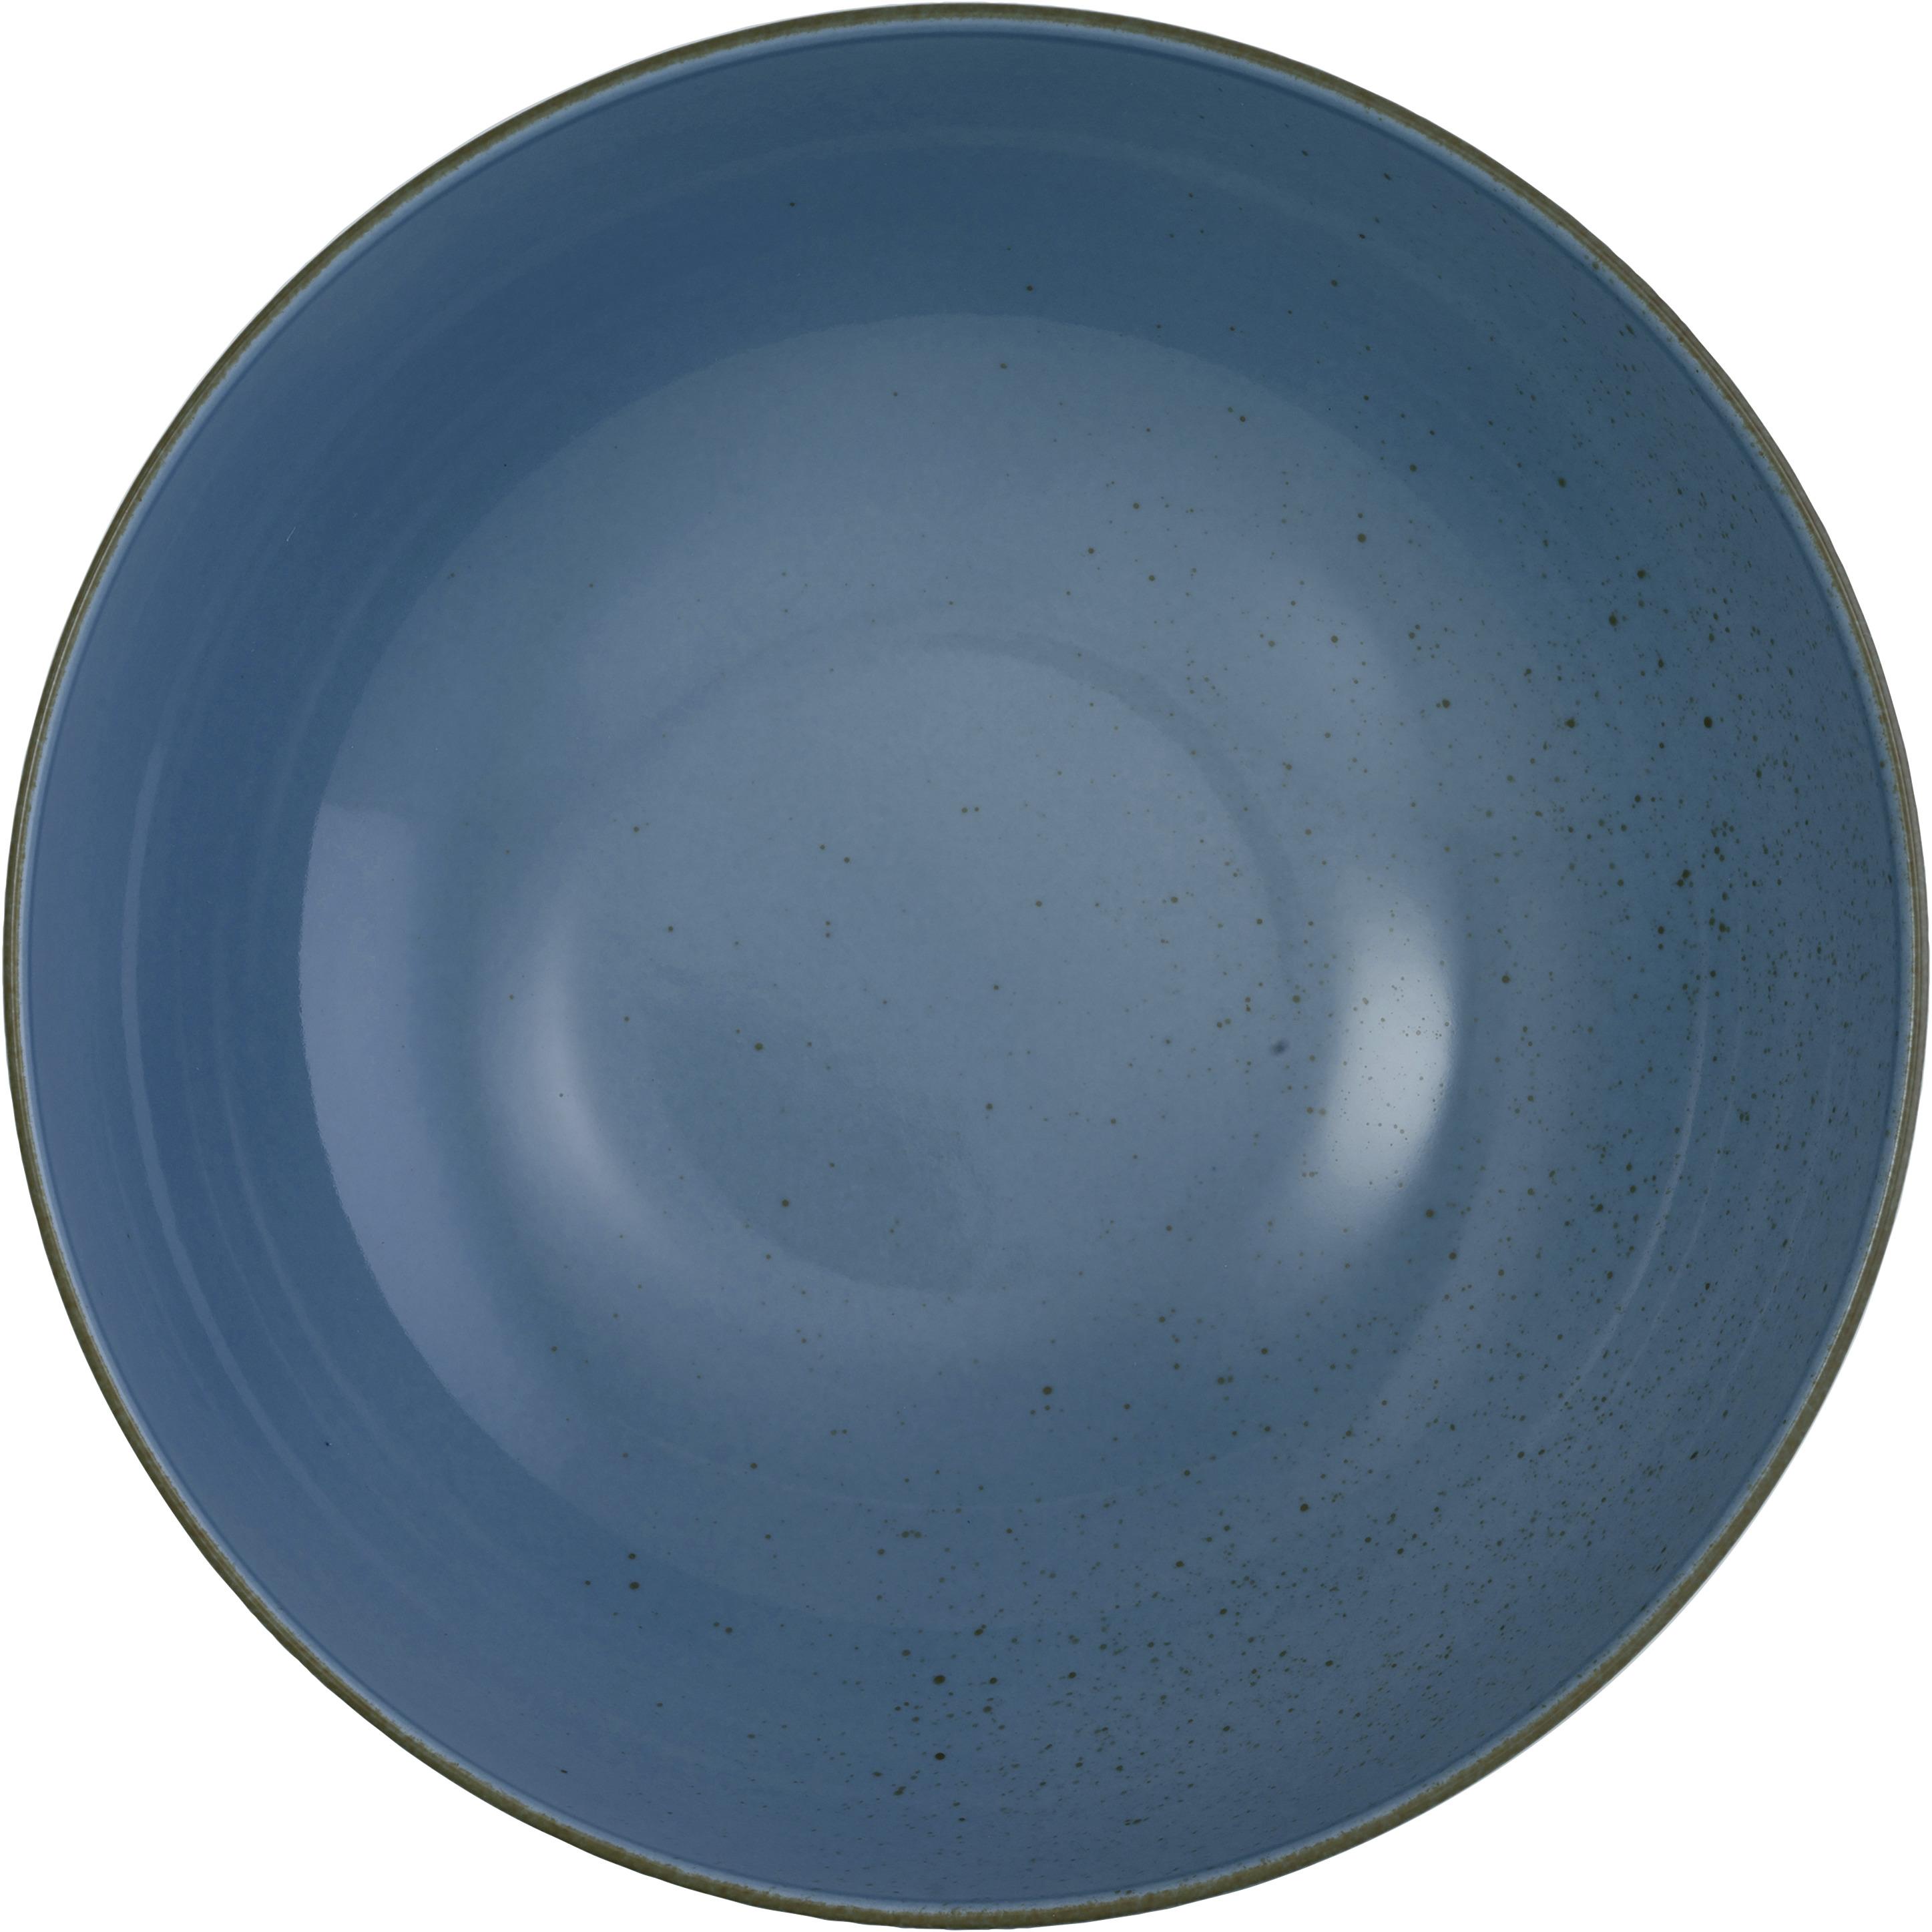 Salatschüssel Capri aus Porzellan Ø ca. 25cm - Blau, Modern, Keramik (25/25/8cm) - Premium Living